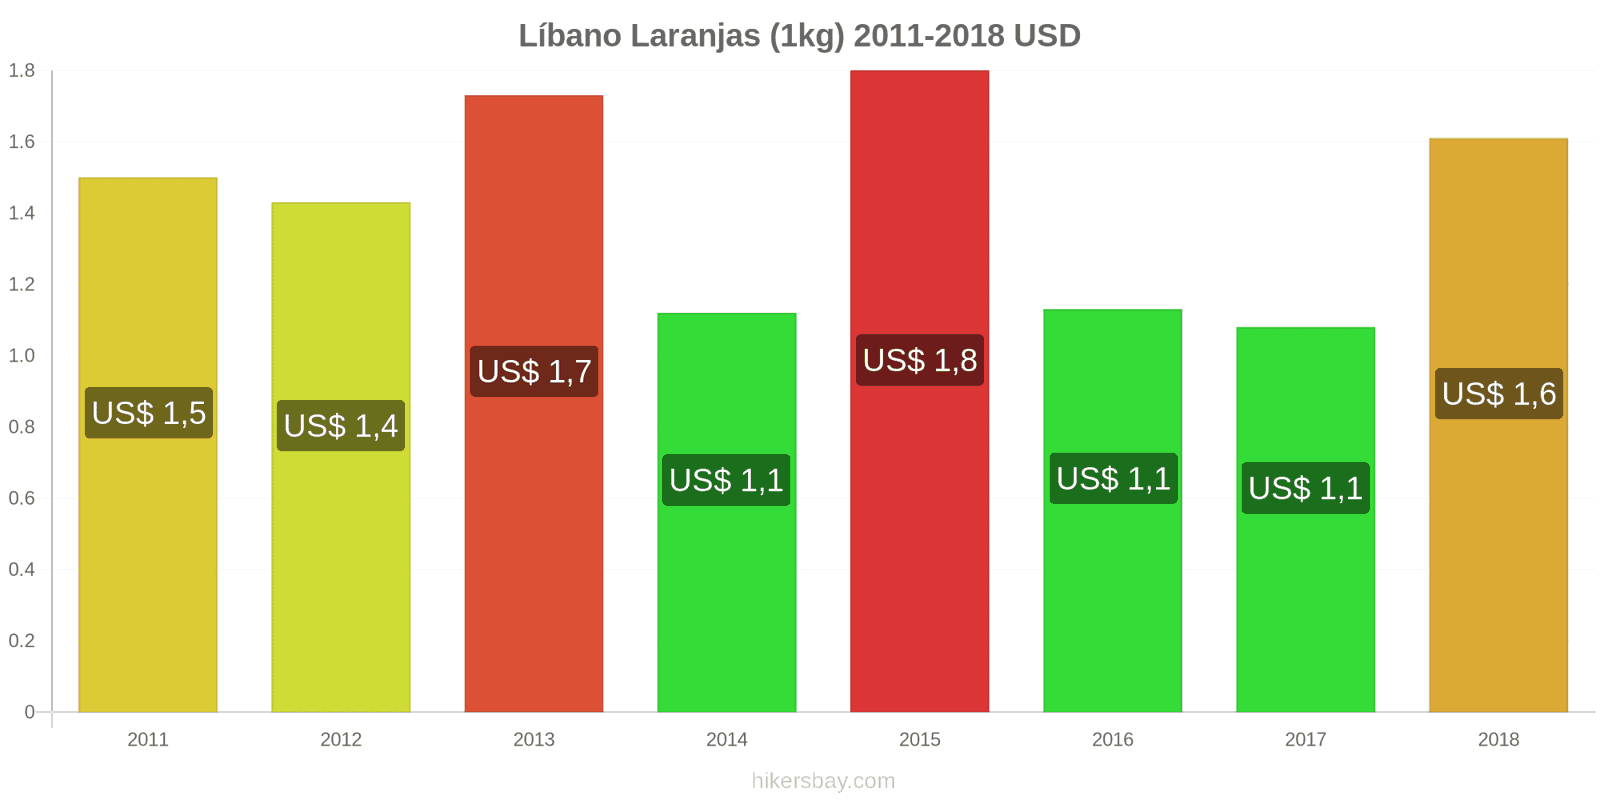 Líbano mudanças de preços Laranjas (1kg) hikersbay.com